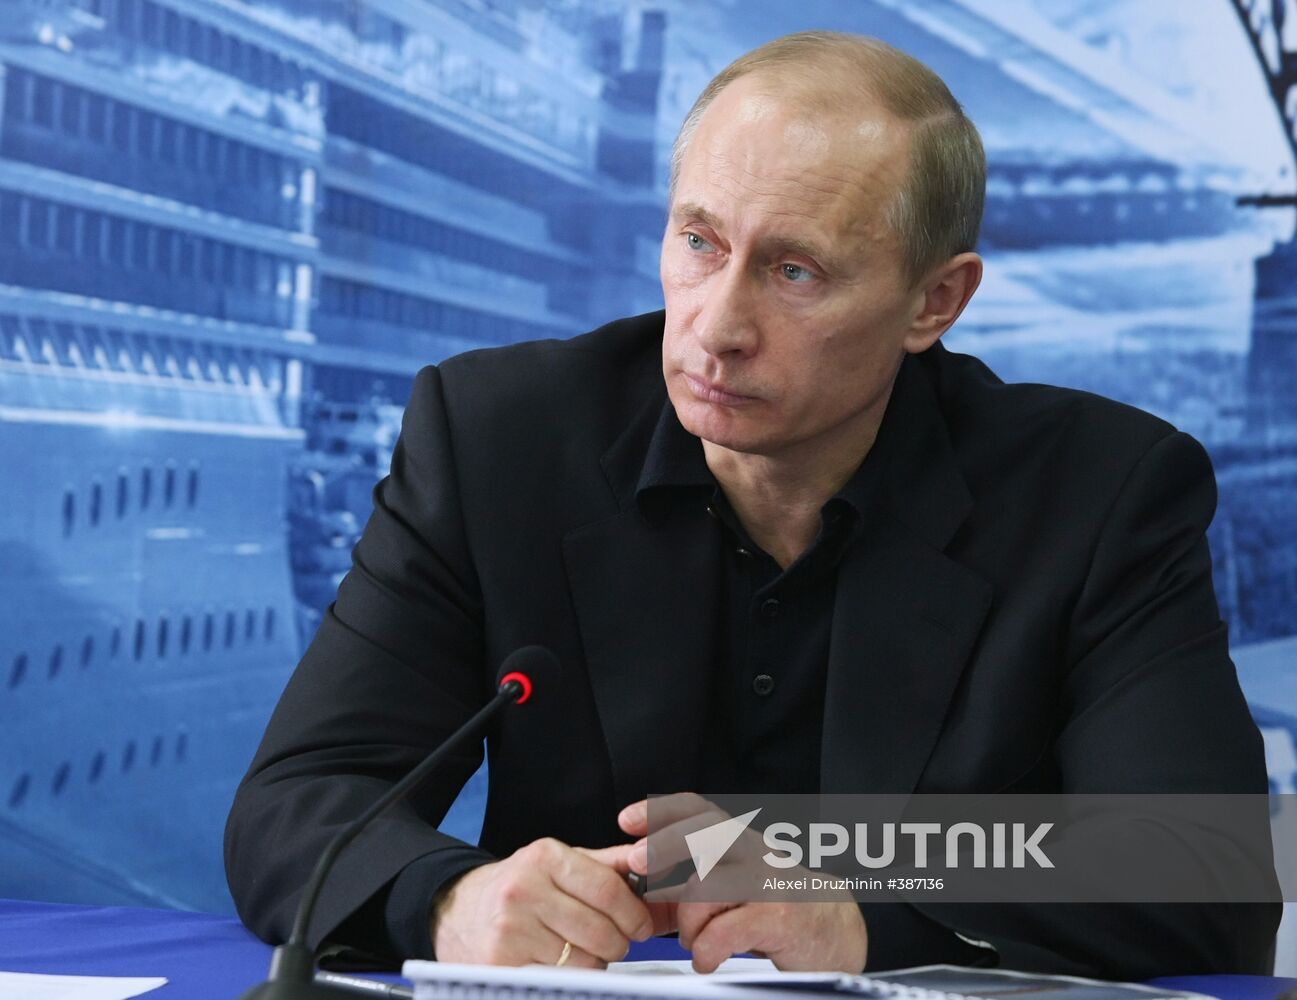 Russian PM Vladimir Putin conducts meeting in St. Petersburg